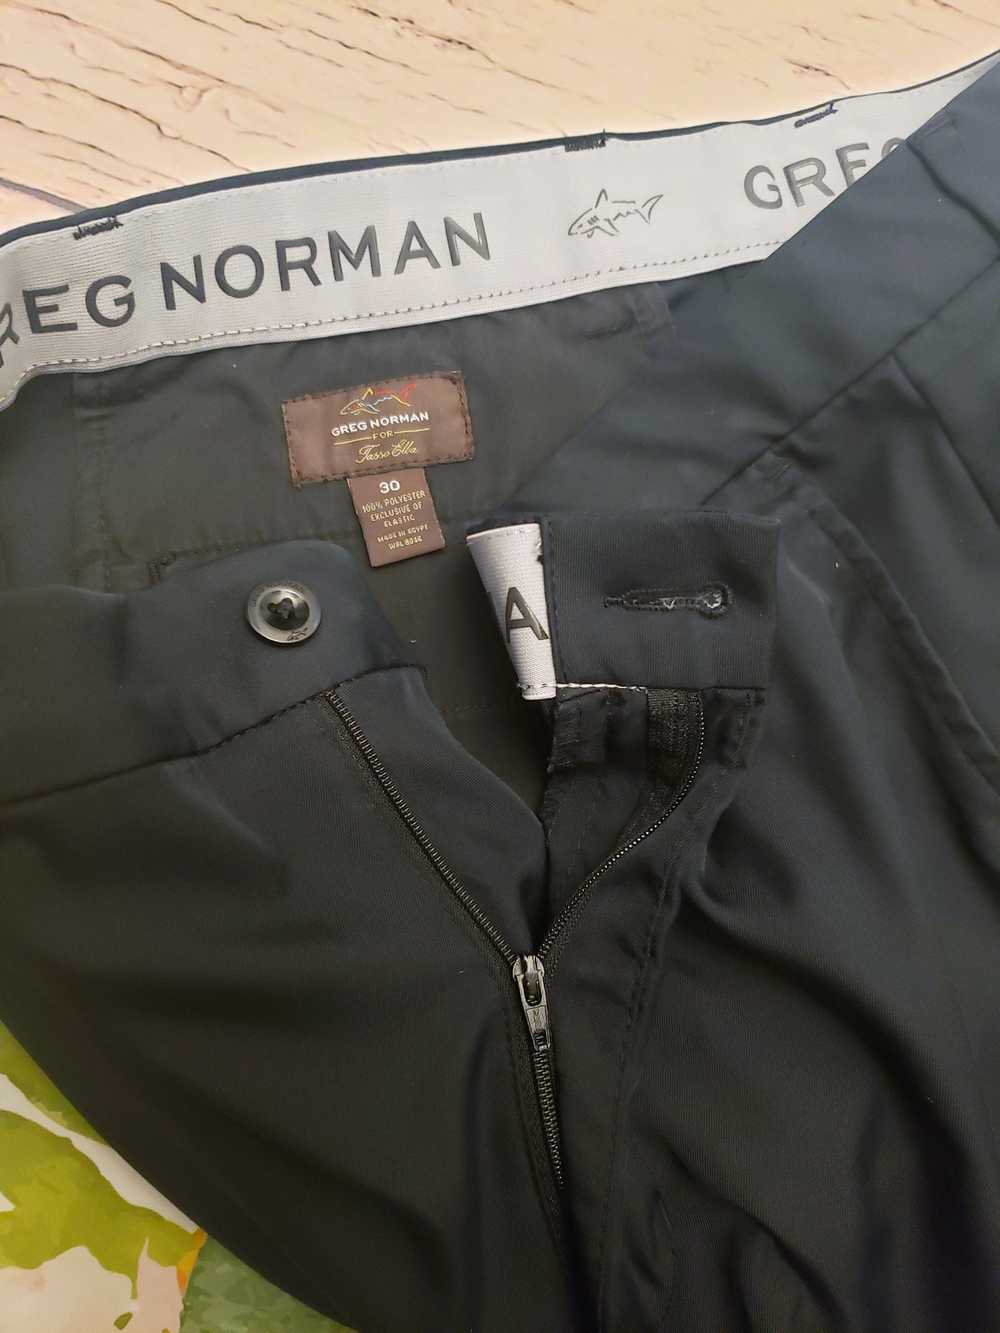 Greg Norman Greg Norman Shorts Size 30 - image 4